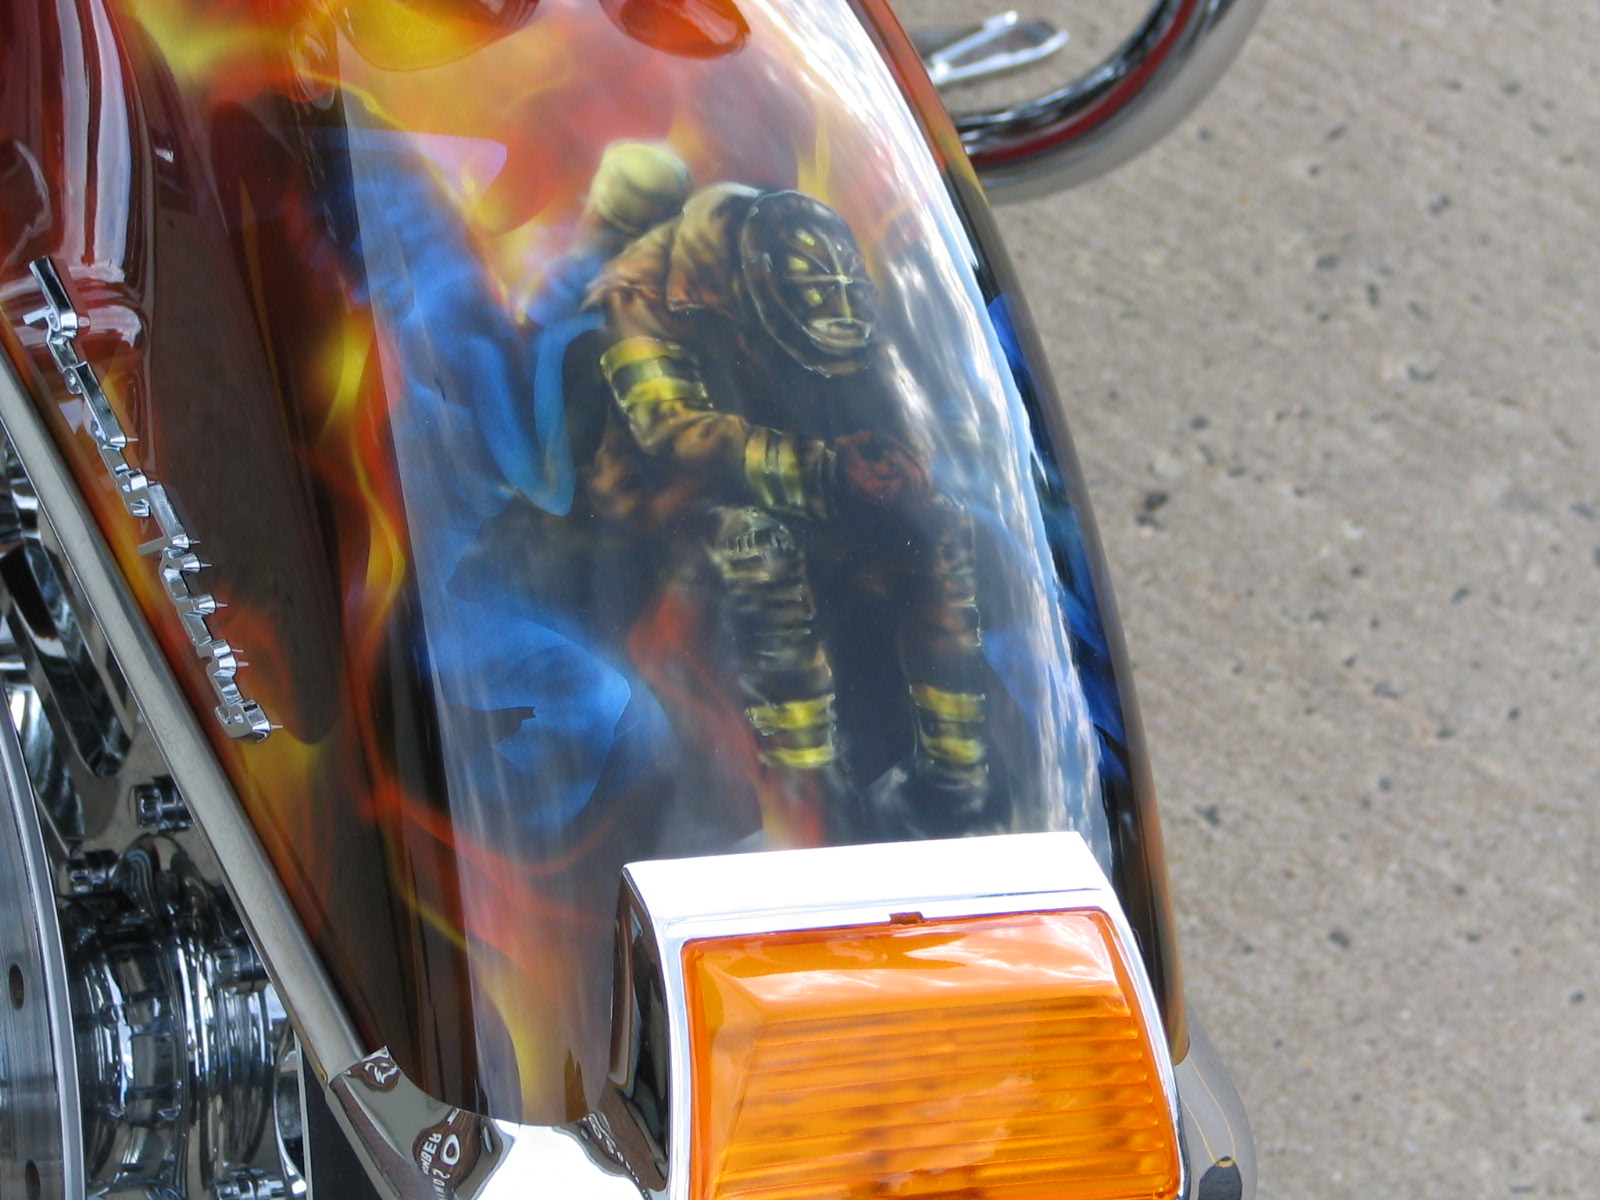 Firefighter Gifts The Brotherhood Bond: 9/11 Harley Davidson